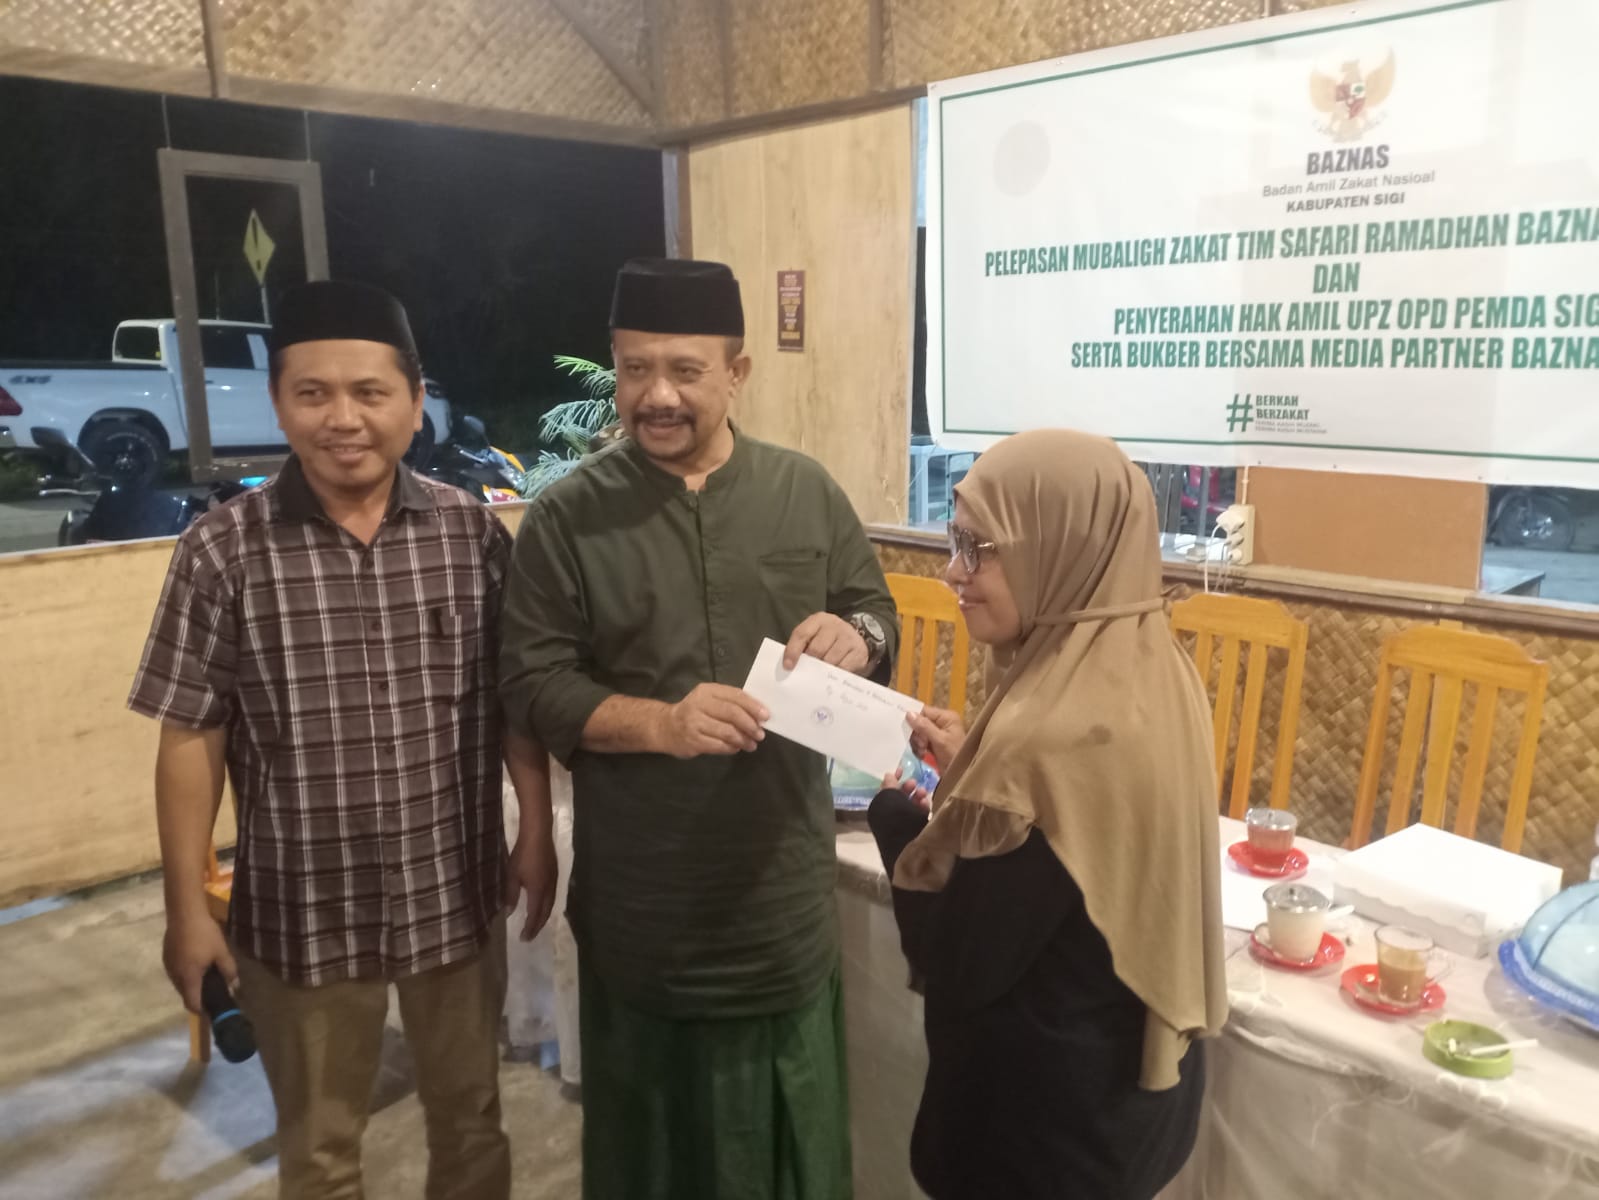 Sekretaris Daerah Sigi Nuim Hayat didampingi Ketua BAZNAS Sigi Hady Wijaya, serahkan hak amil UPZ OPD Pemda Sigi, Sabtu (15/4/2023). Foto:Ferry